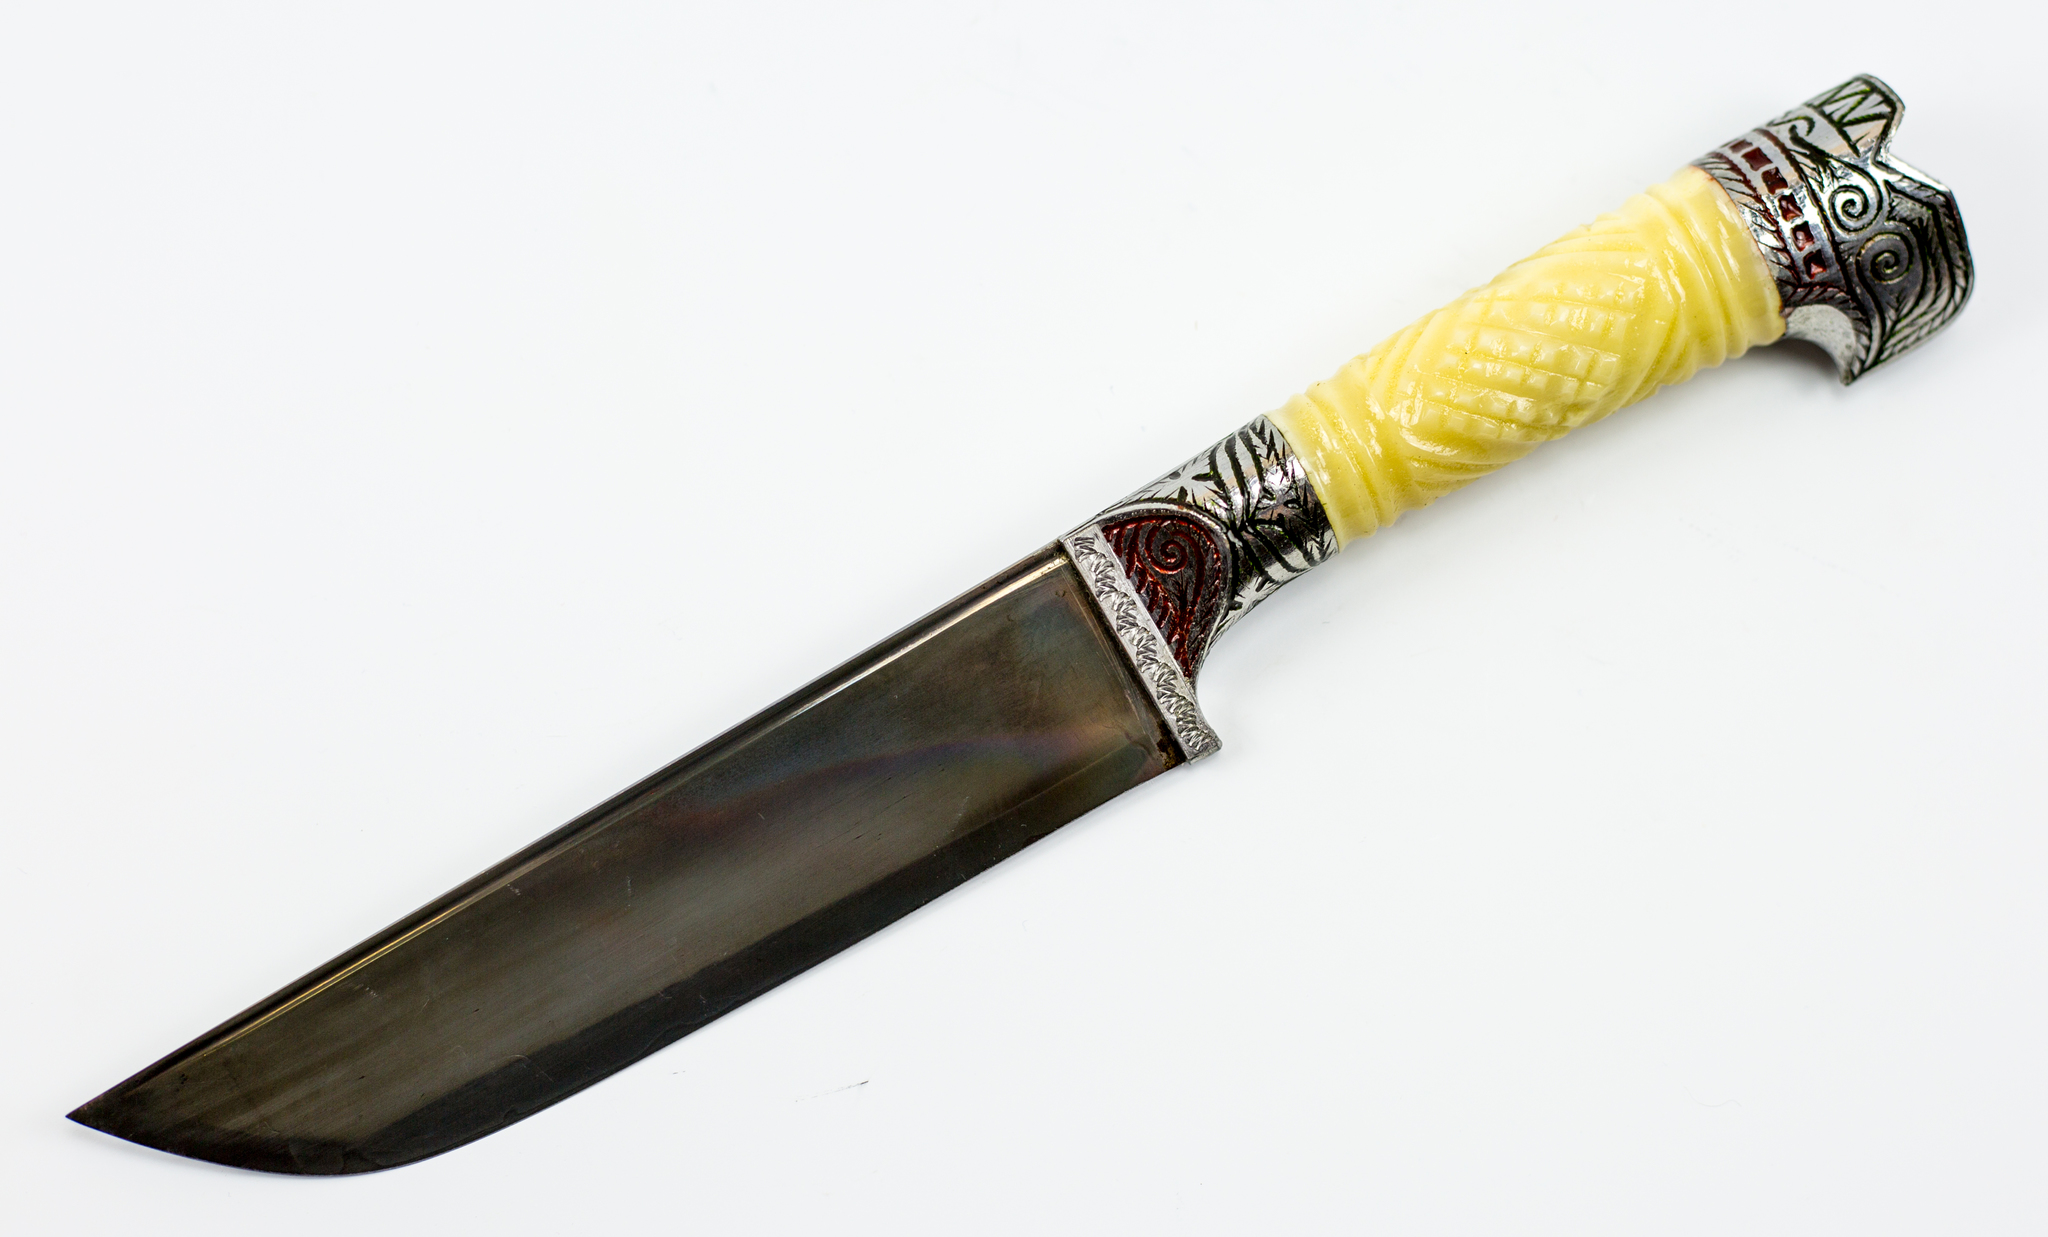 Таджикский нож. Таджикский нож корд. Корд нож Афганский. Ножи узбекские и таджикские. Таджикский кинжал.